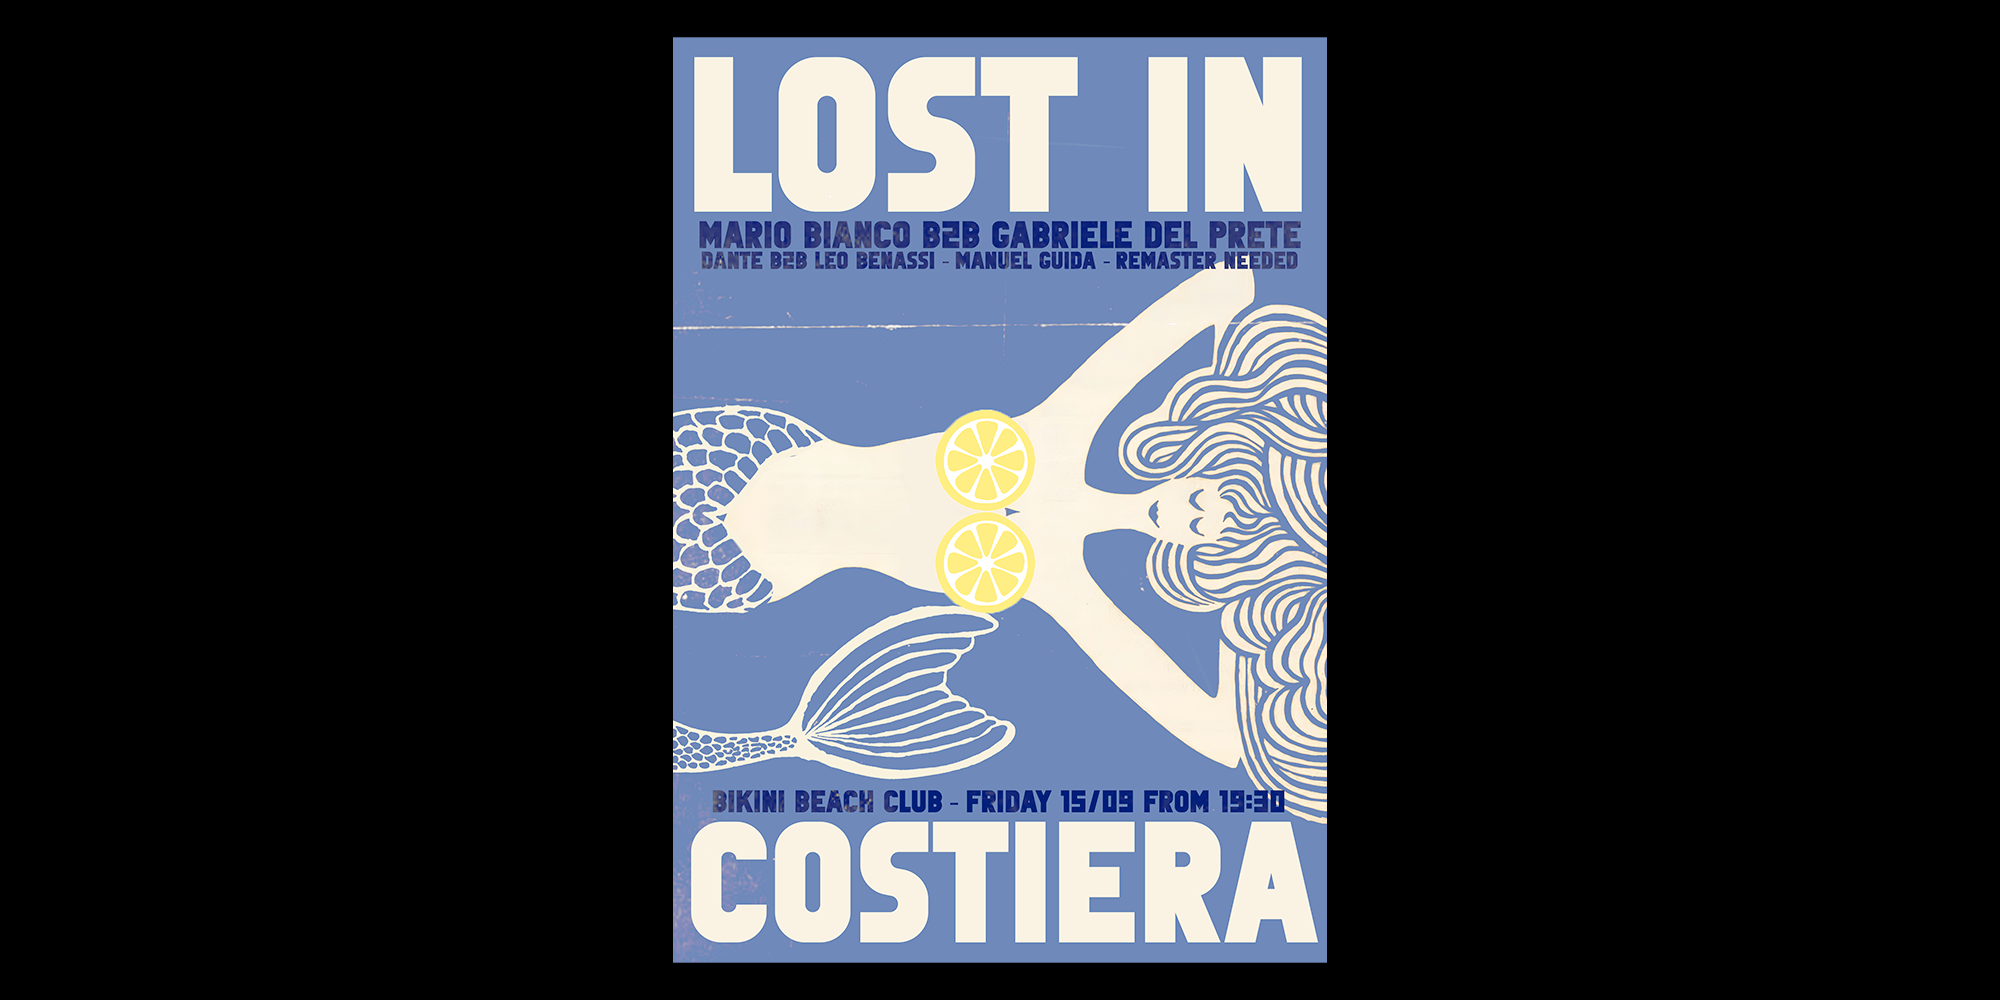 Lost in Costiera - フライヤー表